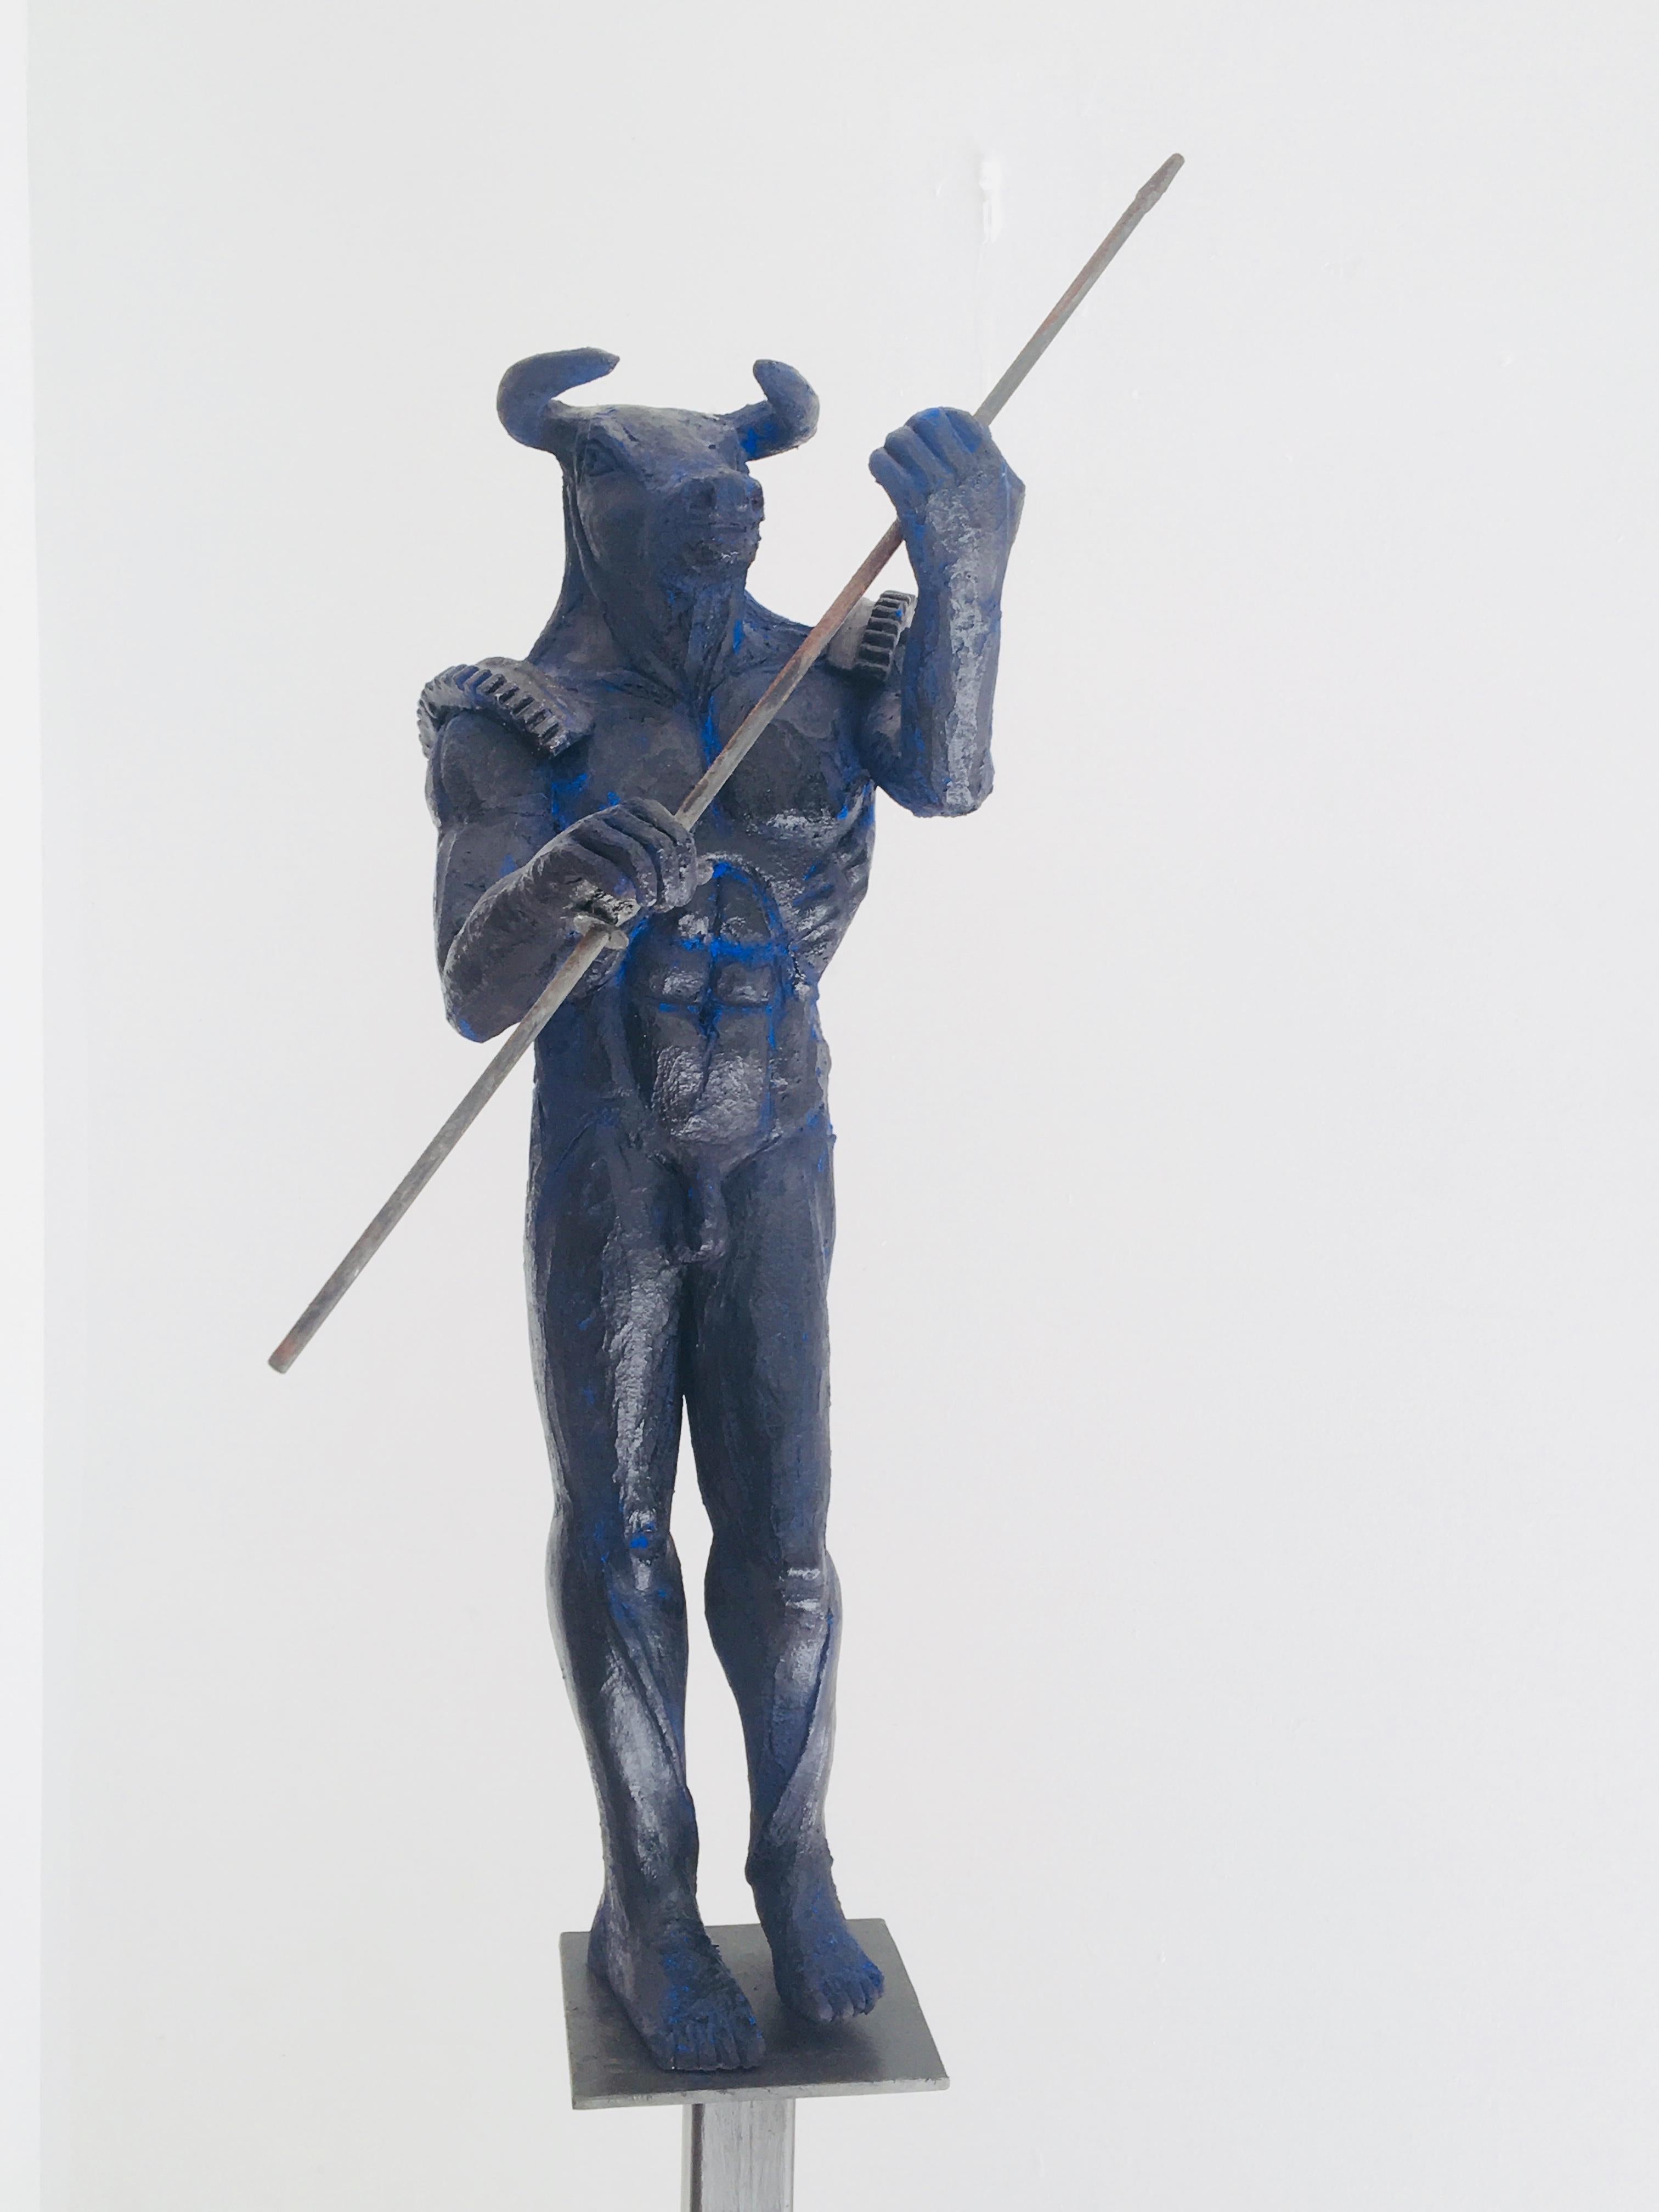 Mariko Figurative Sculpture - Minotaur (pair of sculptures available)